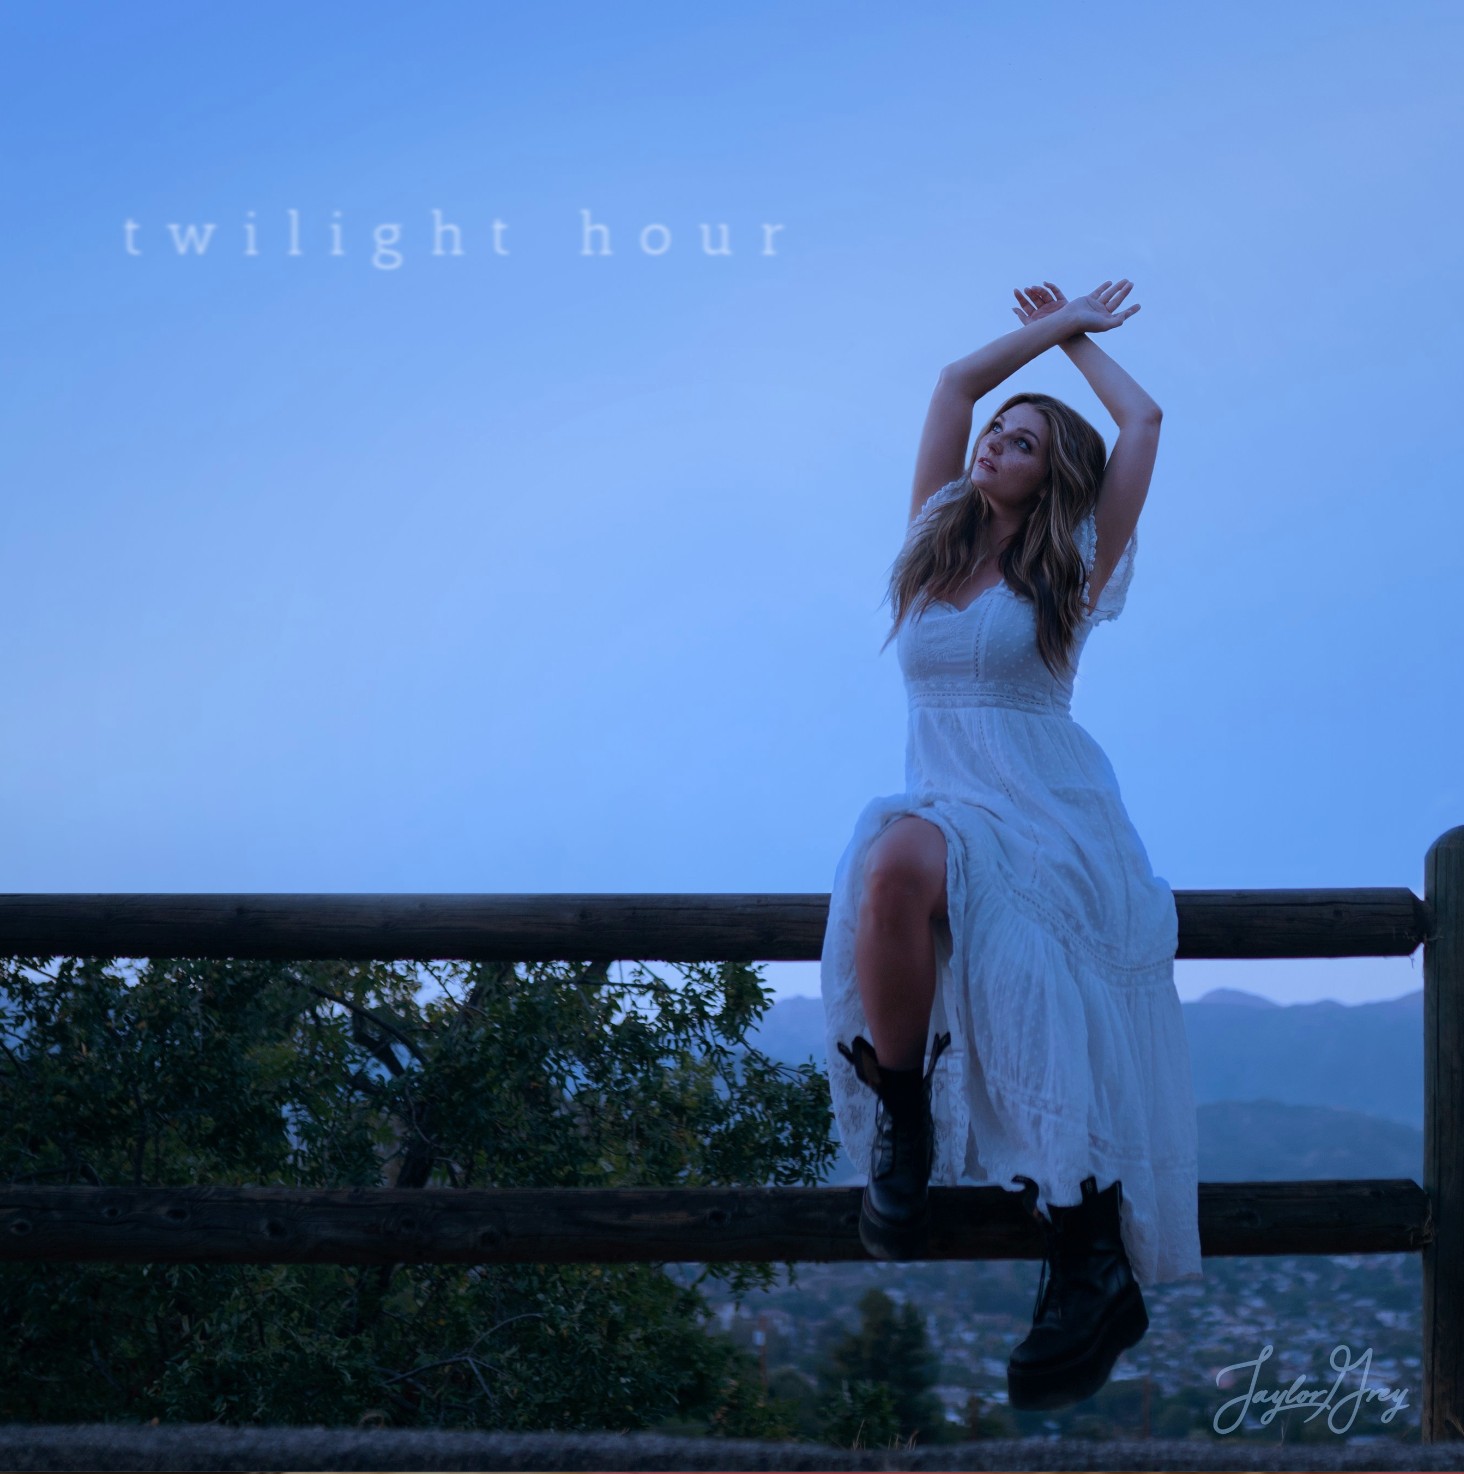 Taylor Grey ‘Twilight Hour’ album artwork